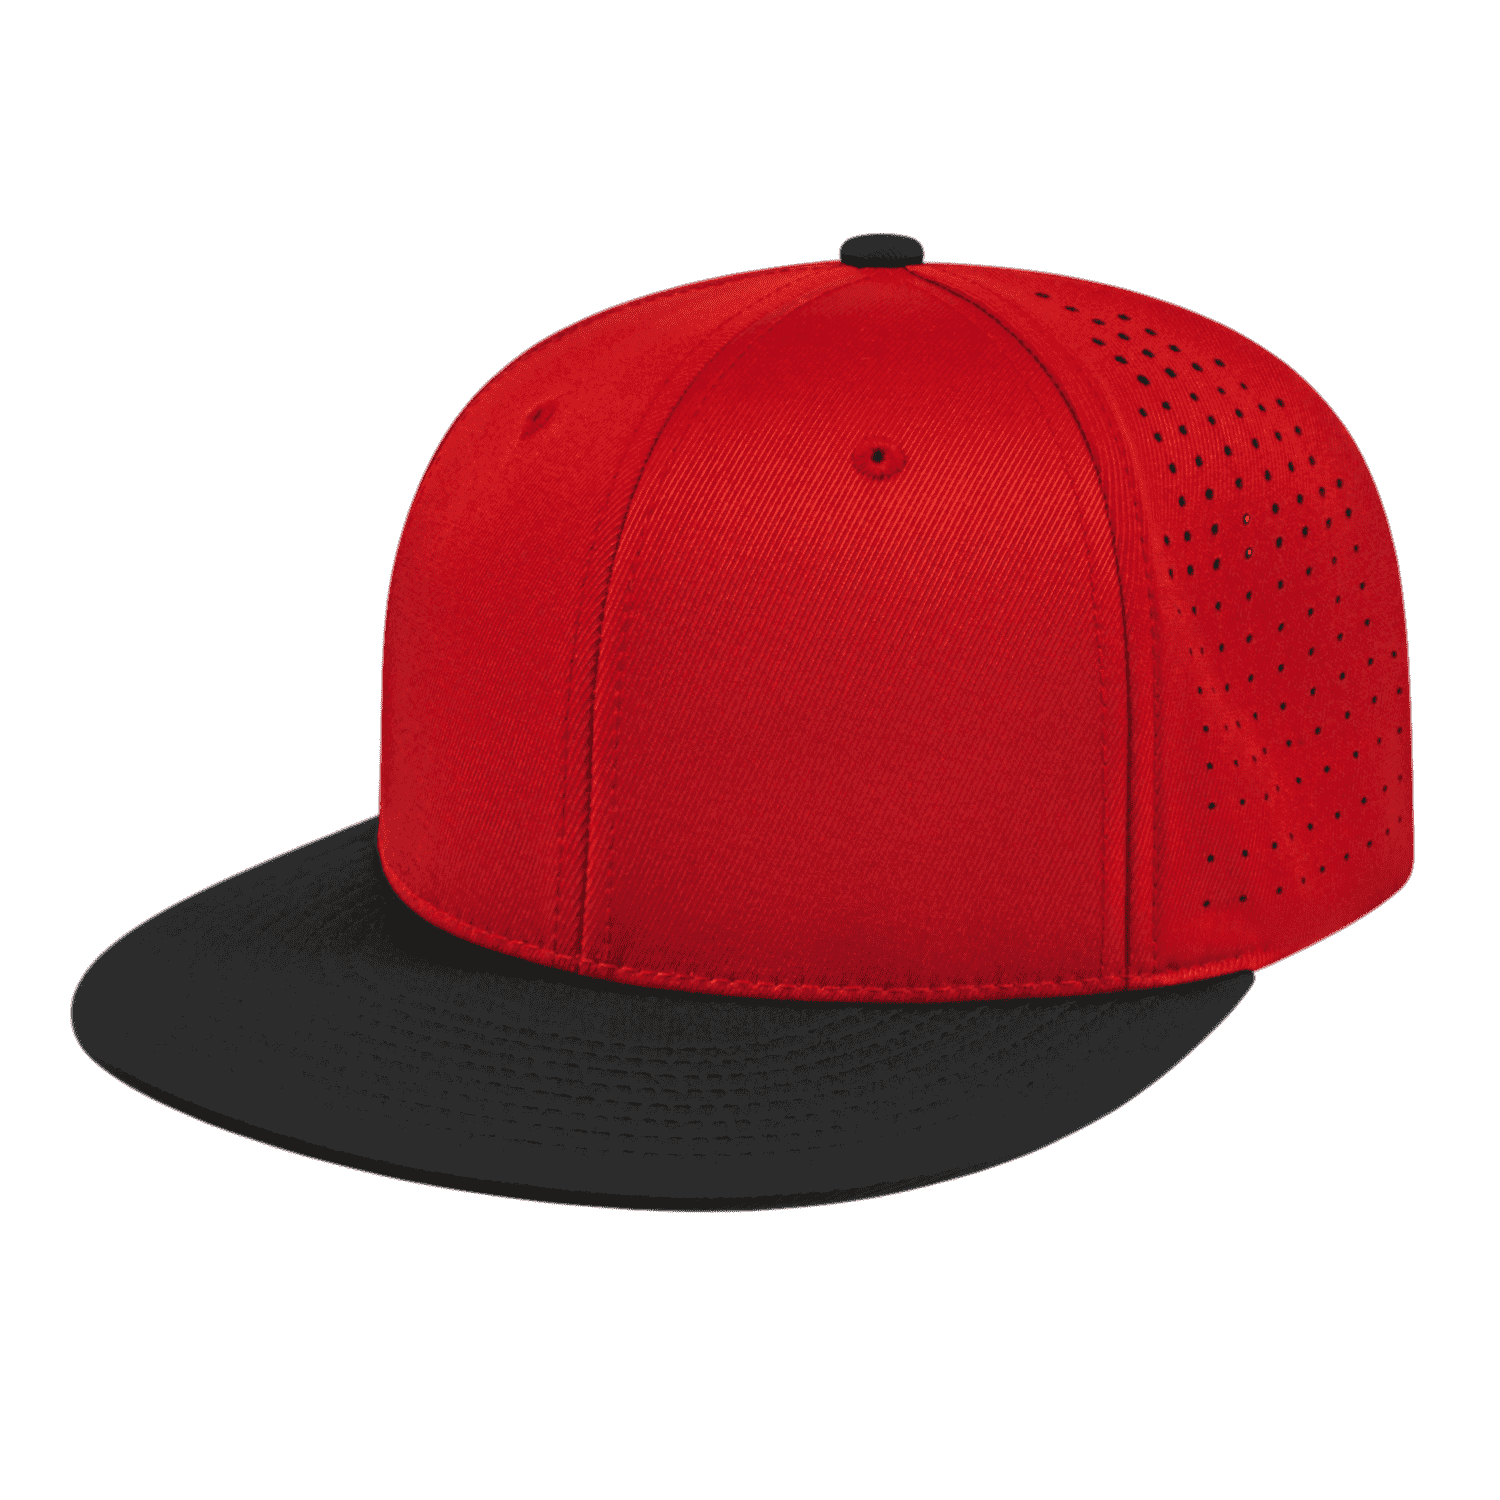 i8503 - Performance Black Cap Cap Red Perforated America Flexfit